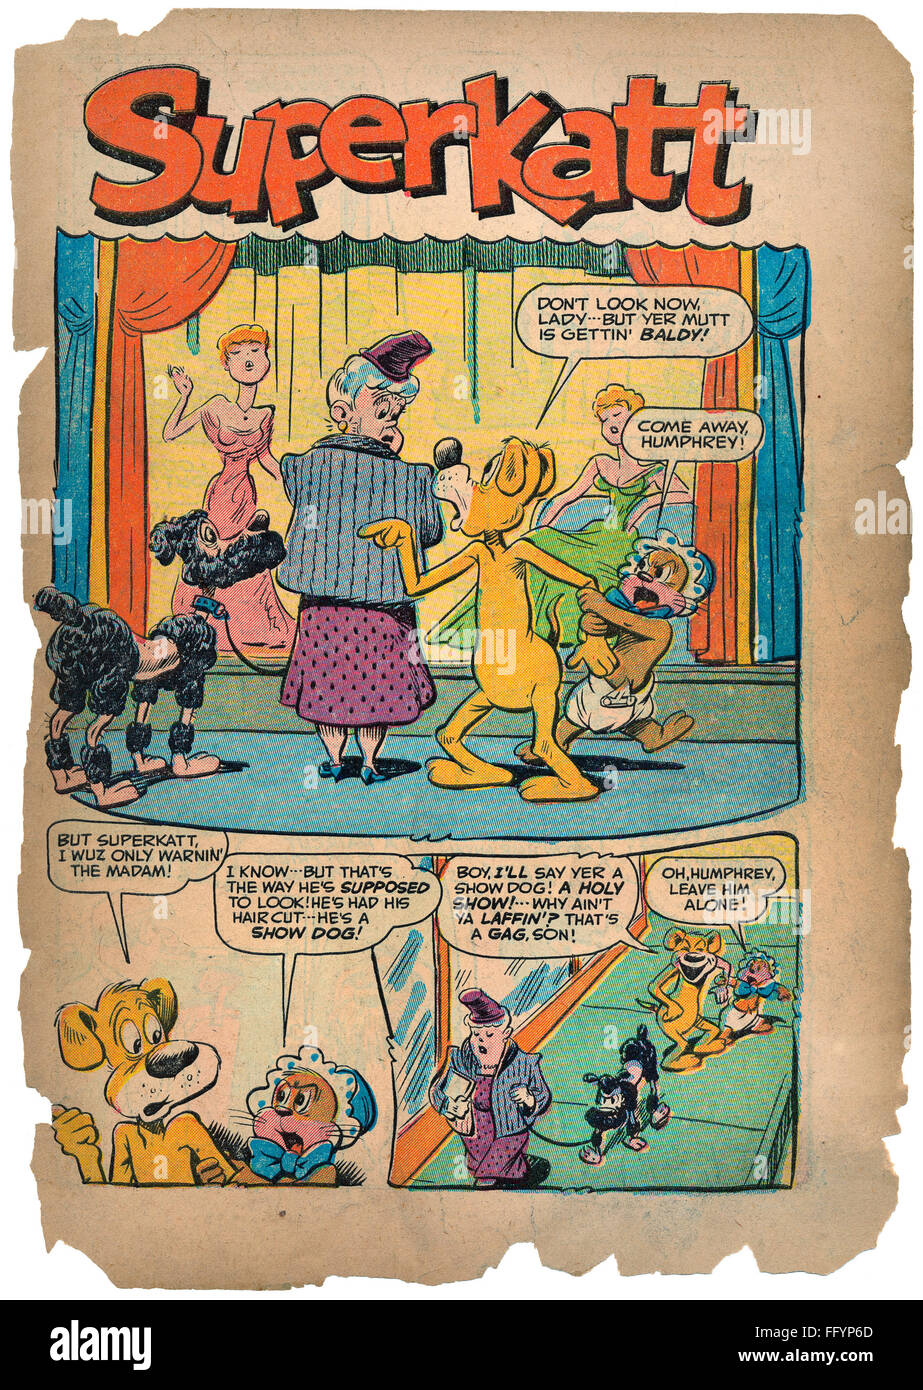 COMIC STRIP: SUPERKATT, 1948. /nFirst page of the comic strip, 'Superkatt,' from the October 1948 issue of Giggle Comics. Stock Photo